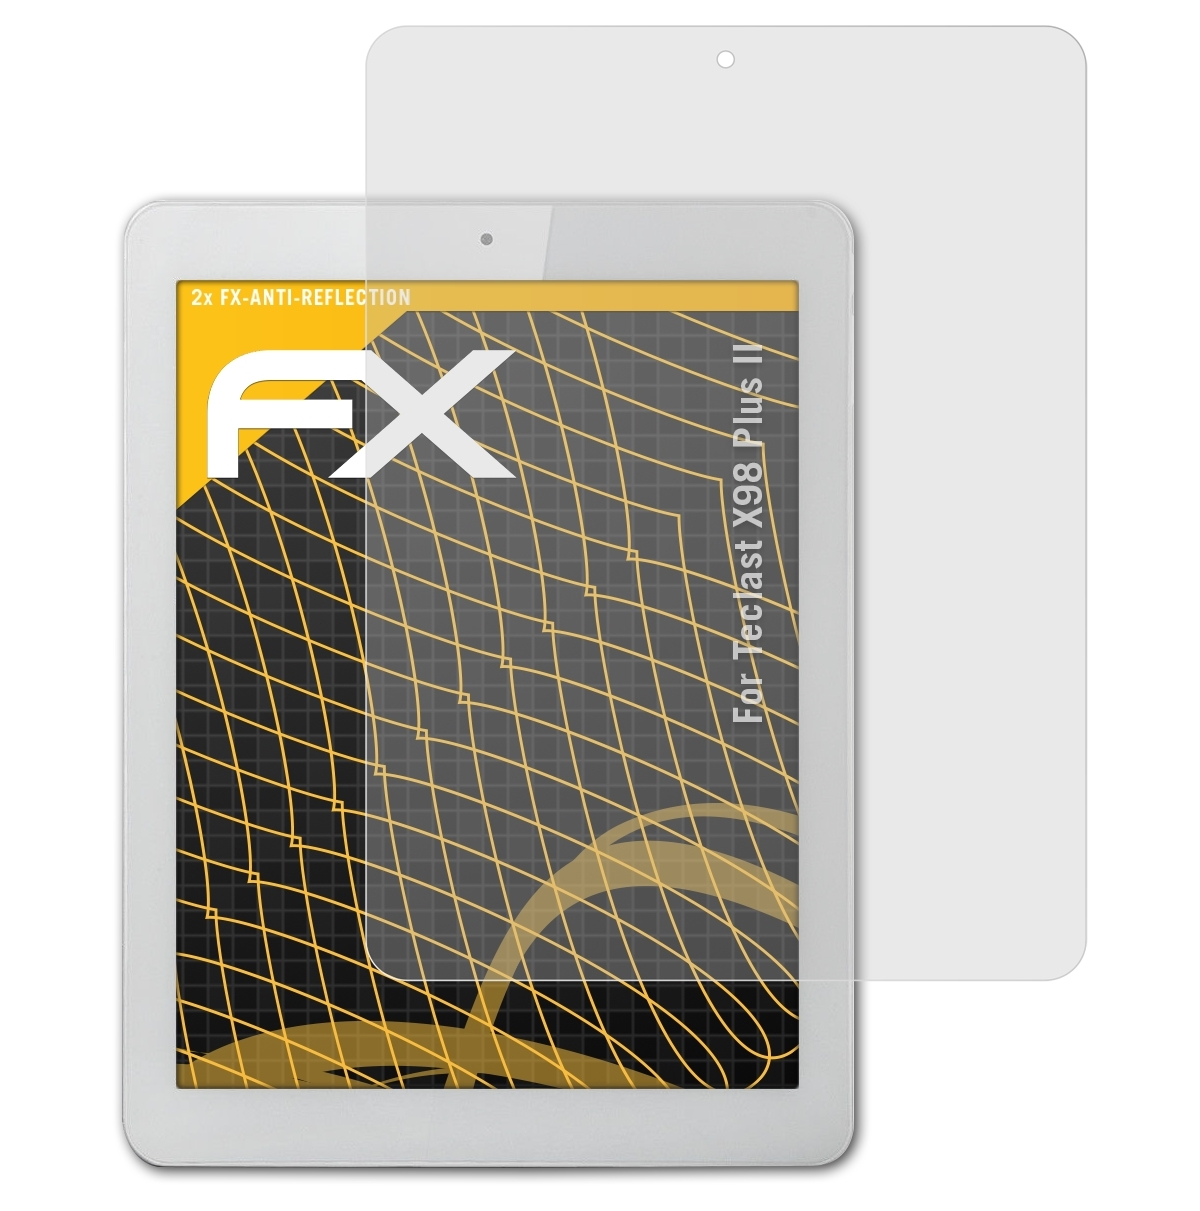 ATFOLIX 2x Displayschutz(für FX-Antireflex X98 Teclast Plus II)